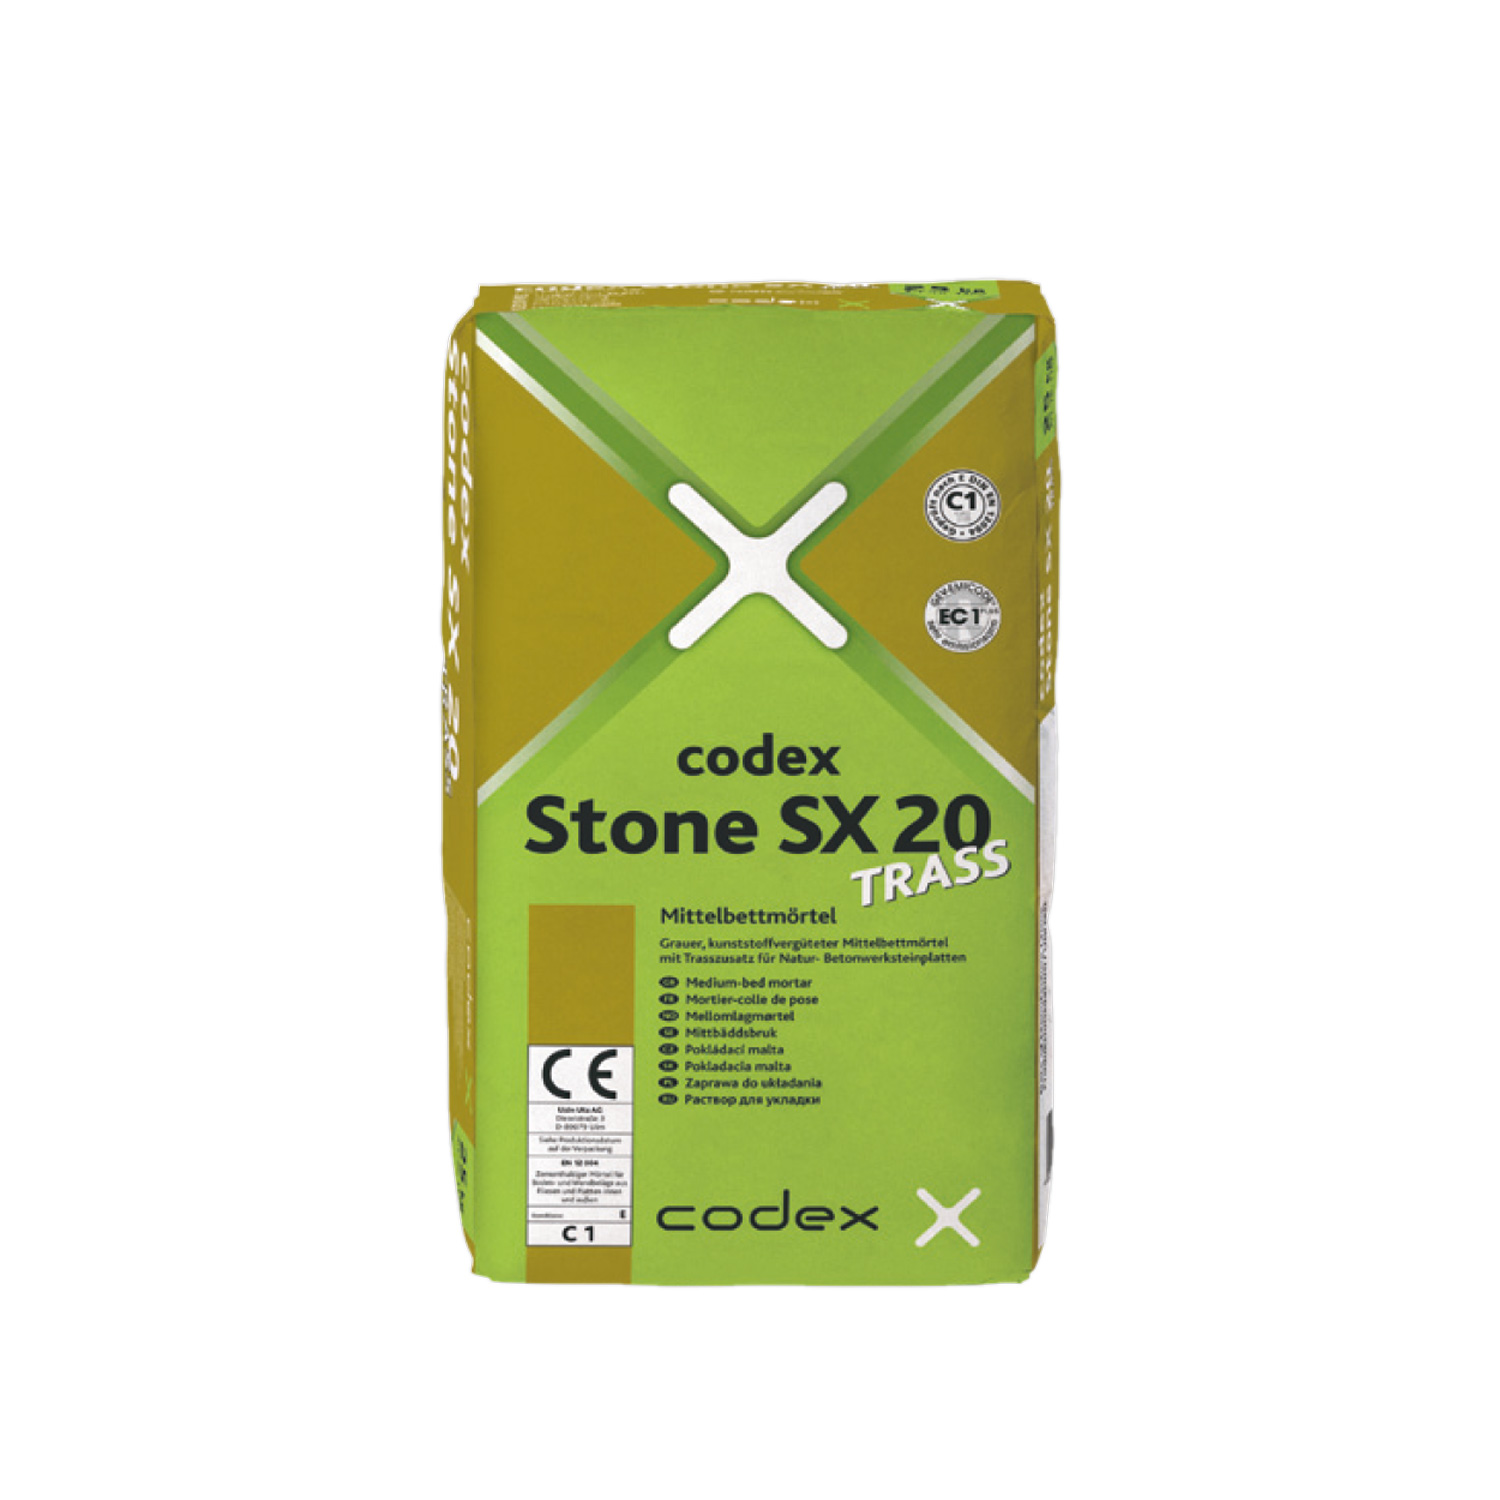 codex Stone SX 20 Trass Mittelbettmörtel, 25kg Sack